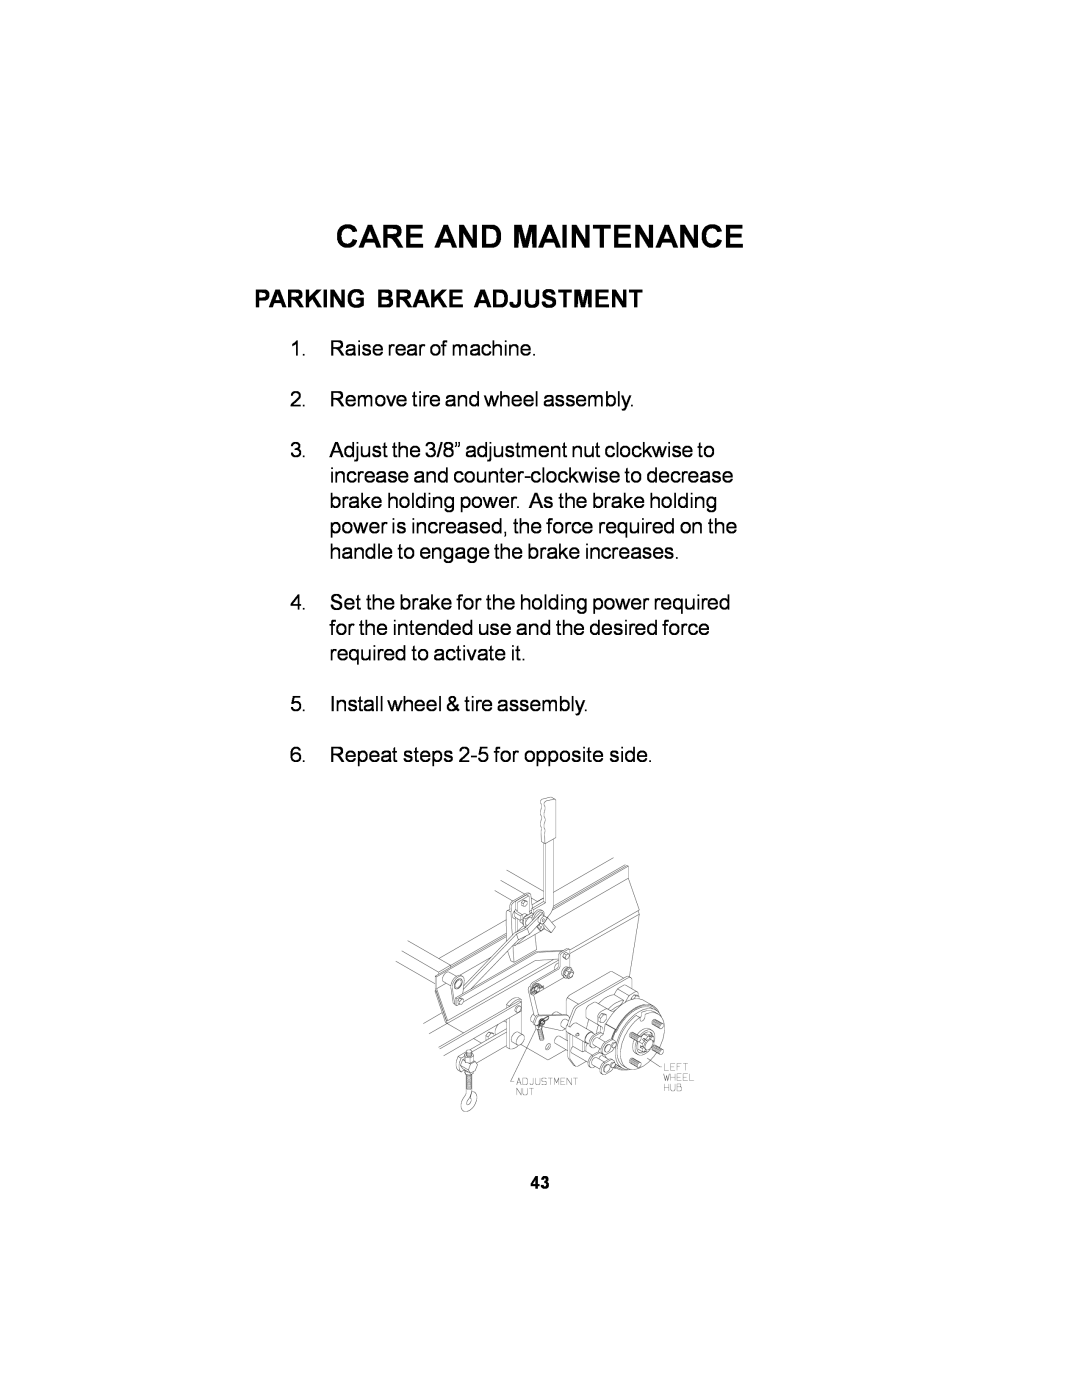 Dixon 12881-106 manual Parking Brake Adjustment, Care And Maintenance 